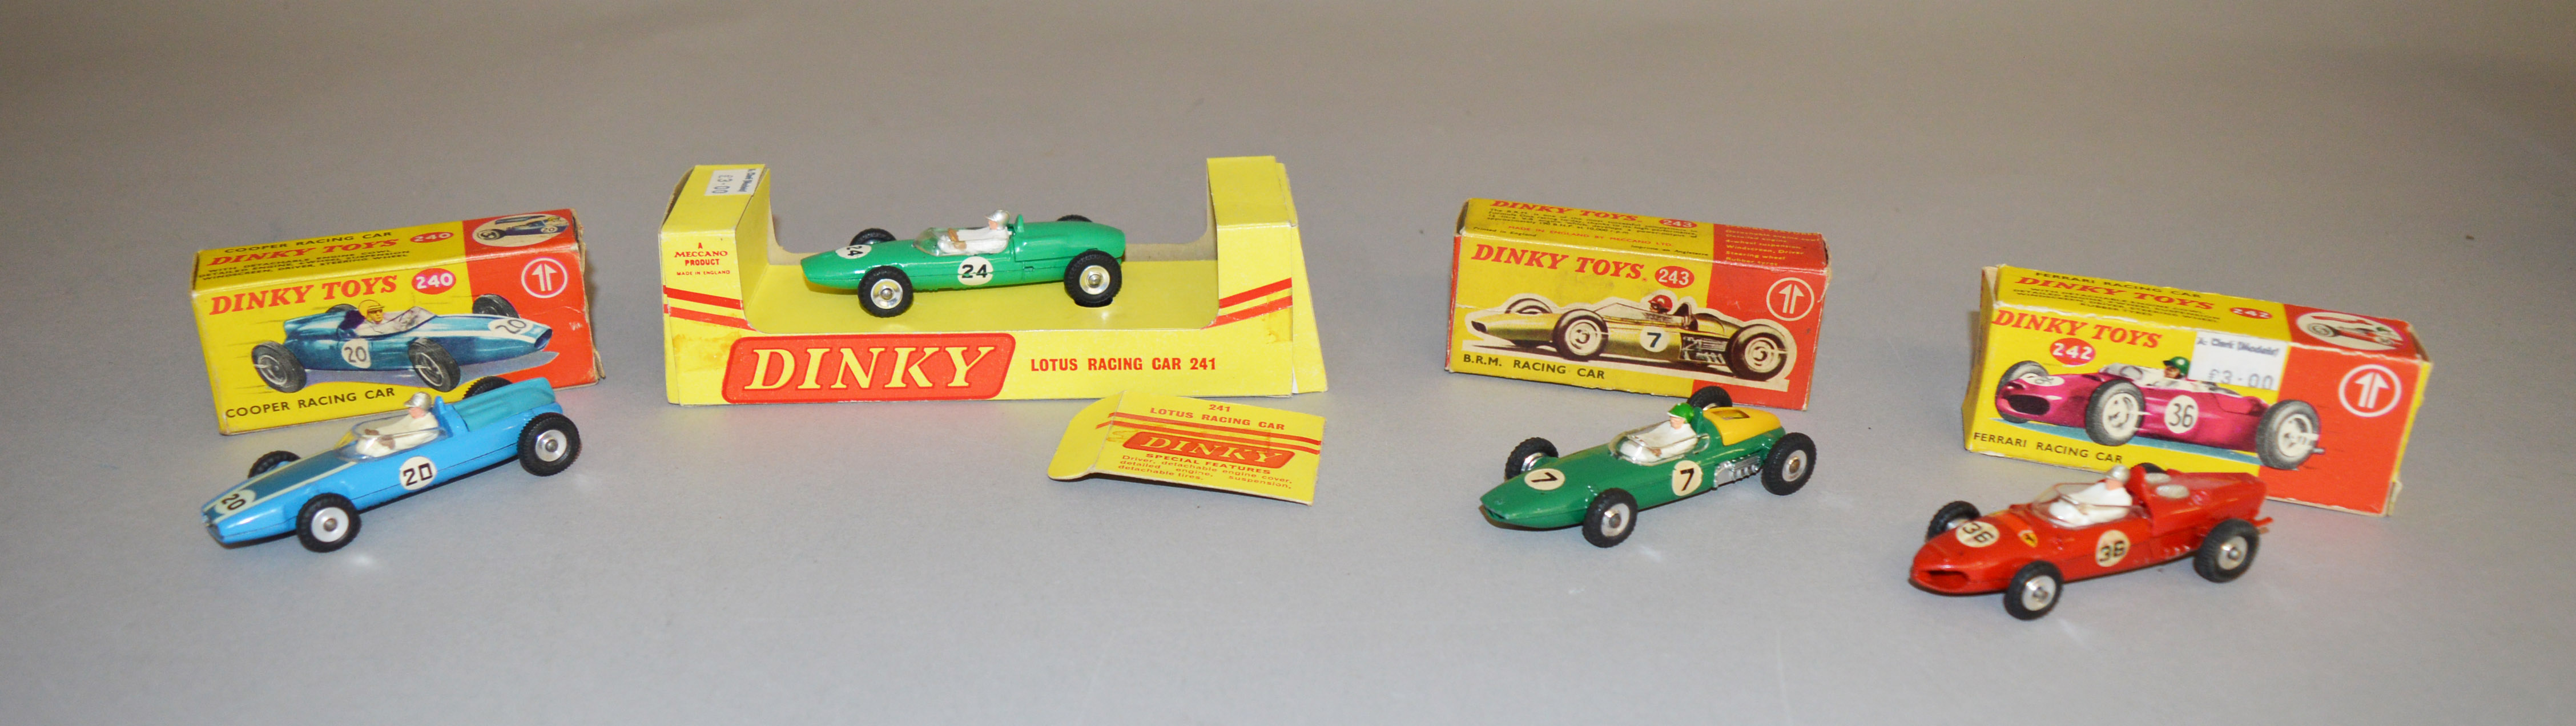 4 boxed Dinky Toys diecast model Racing Cars, 240 Cooper, 242 Ferrari, 243 B.R.M.